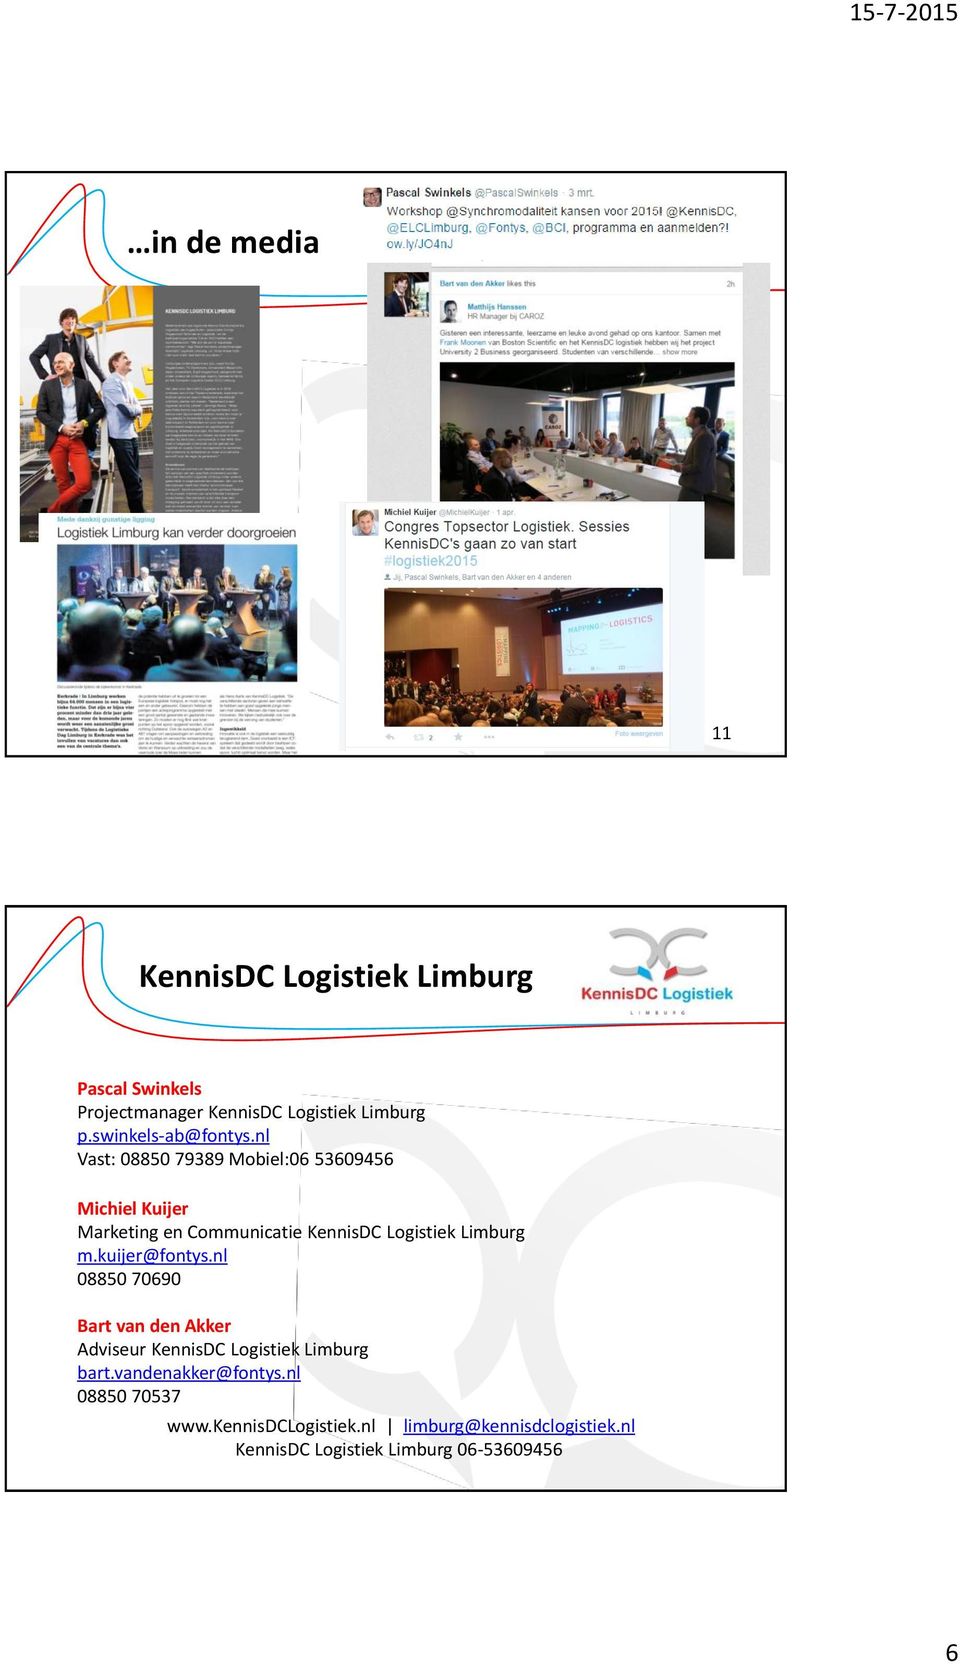 nl Vast: 08850 79389 Mobiel:06 53609456 Michiel Kuijer Marketing en Communicatie KennisDC Logistiek Limburg m.